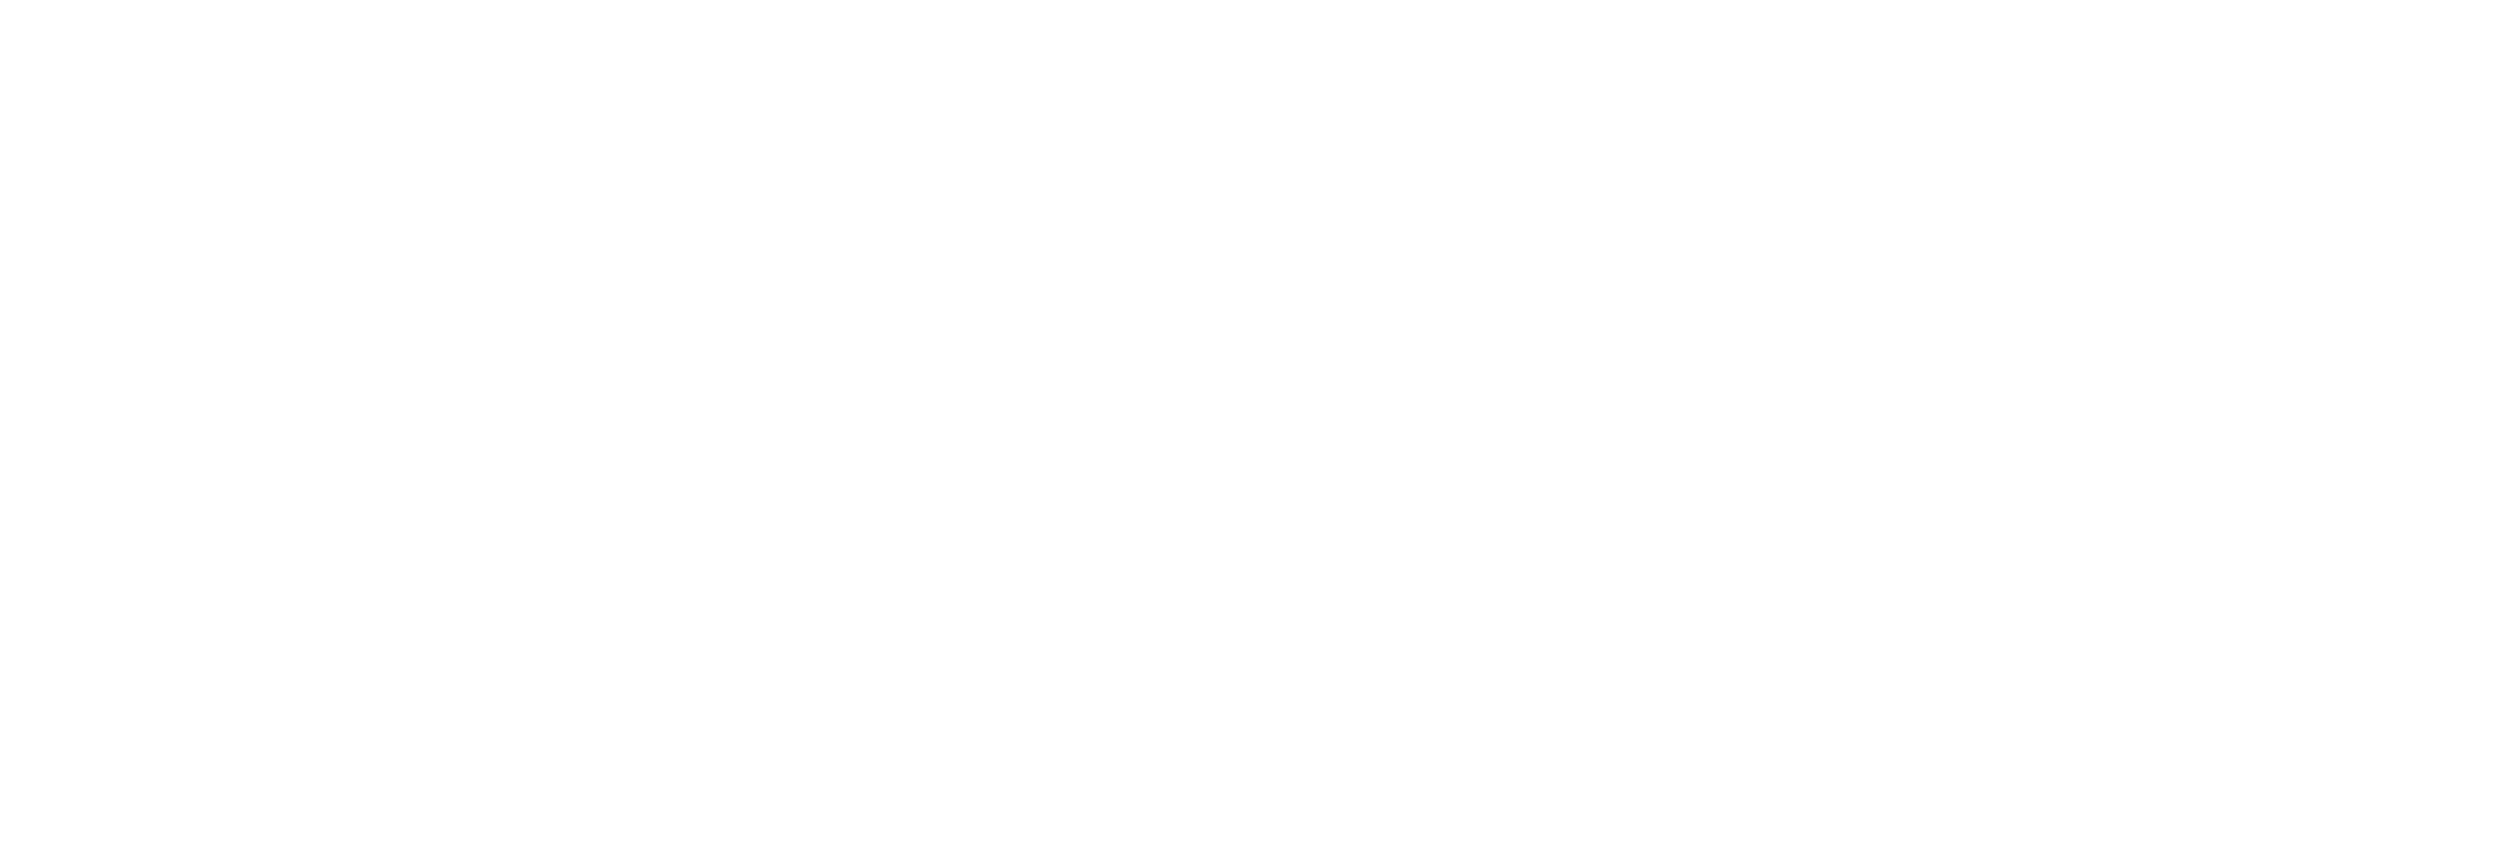 Walsh Industries